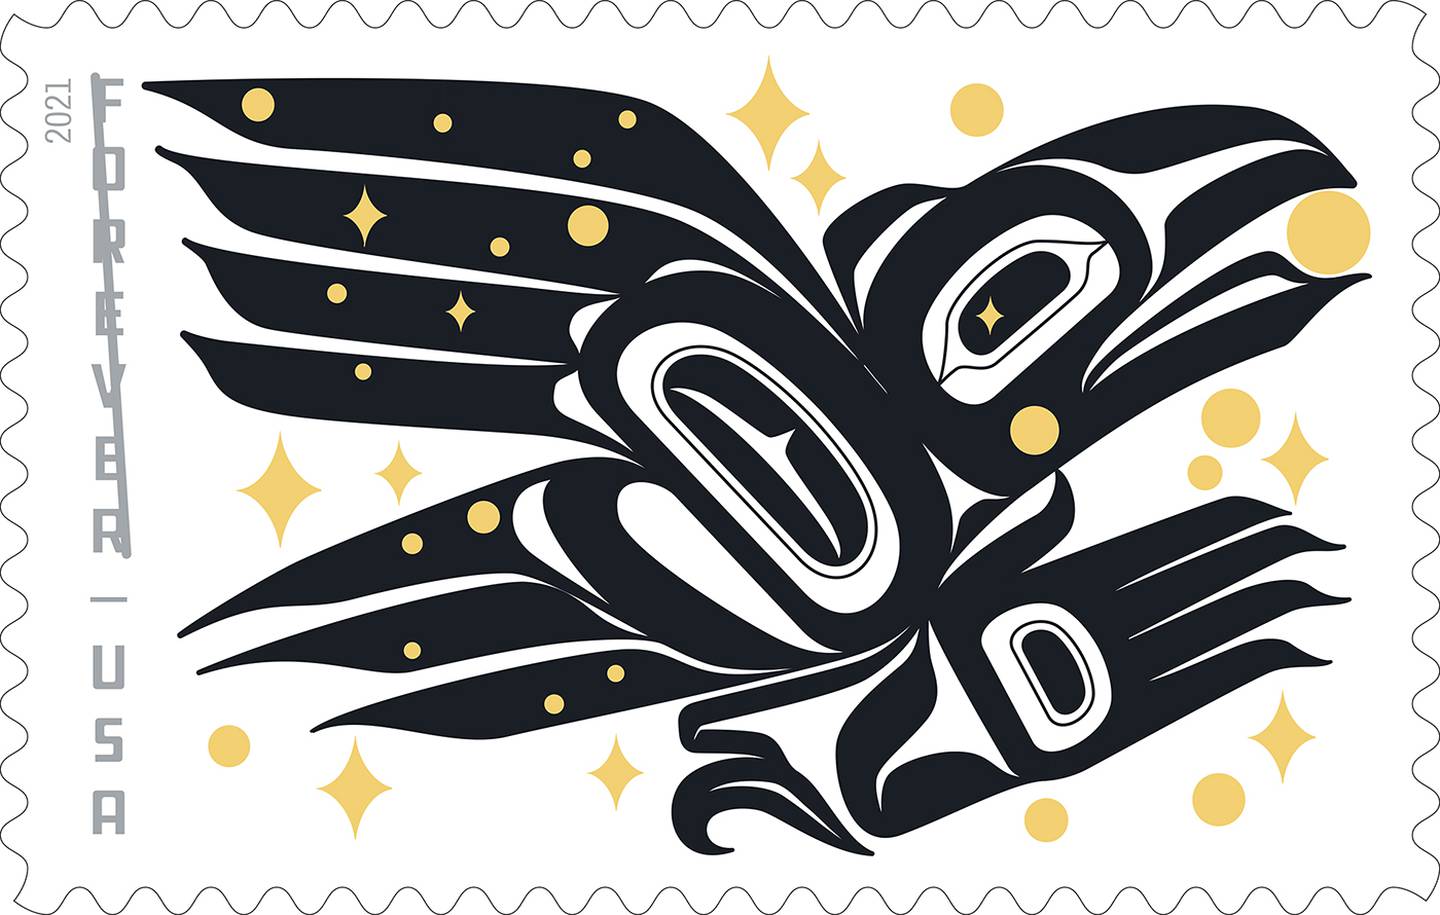 tlingit stamp